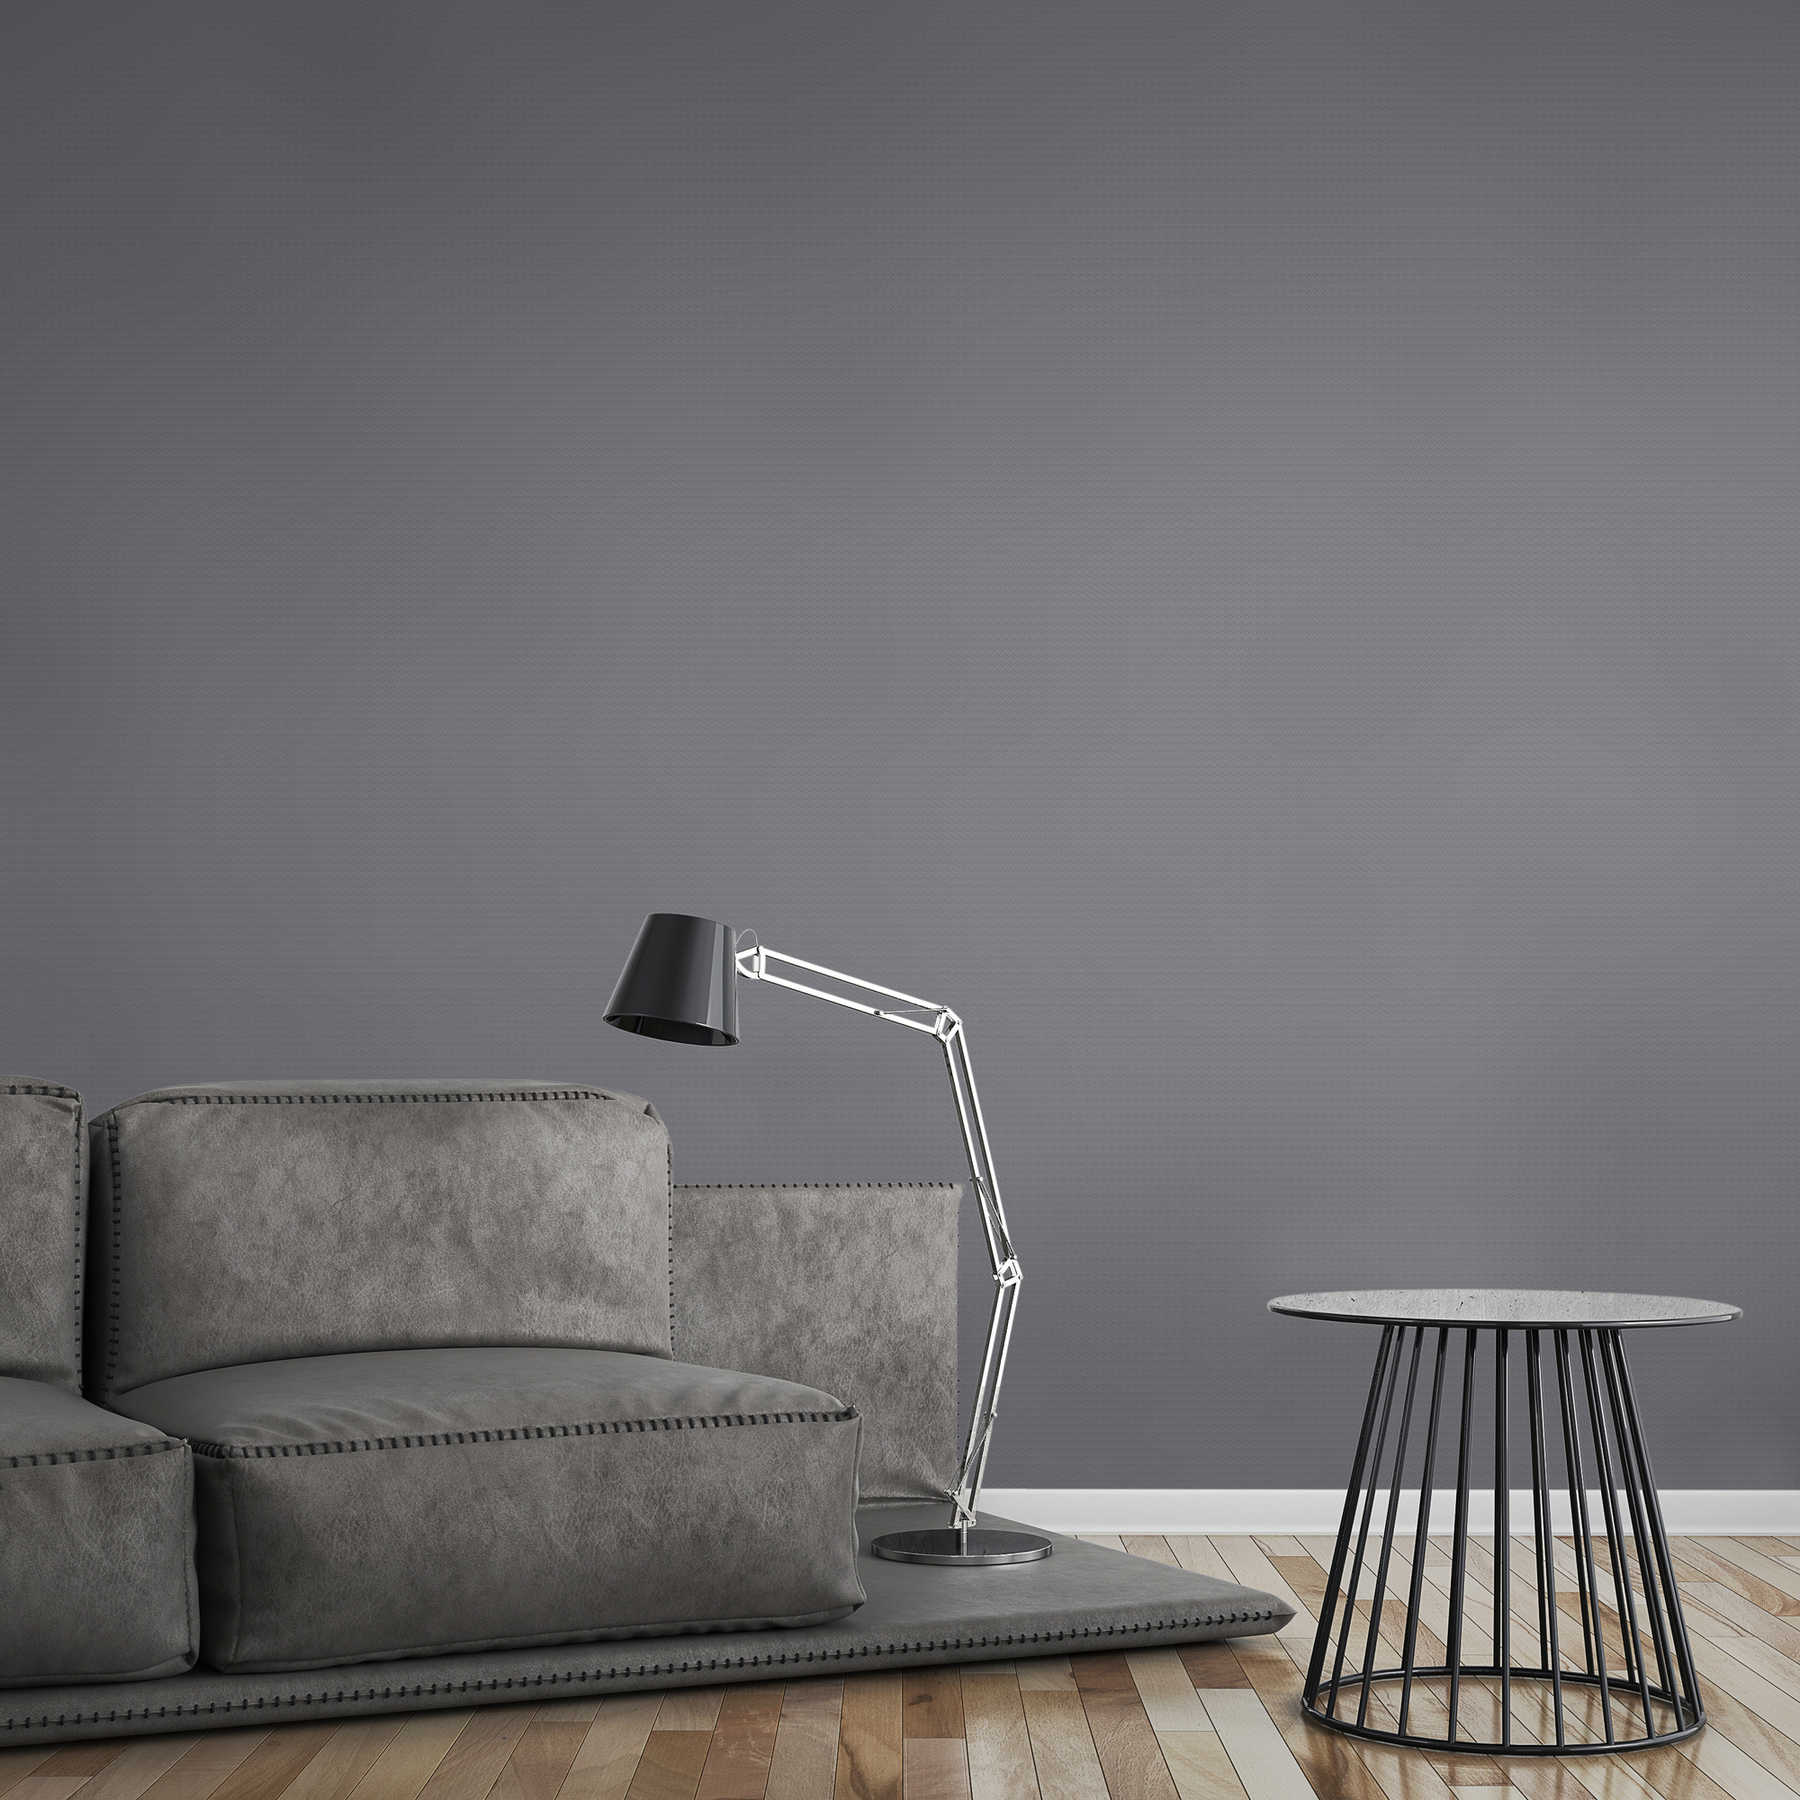             Wallpaper zigzag design & texture pattern - grey
        